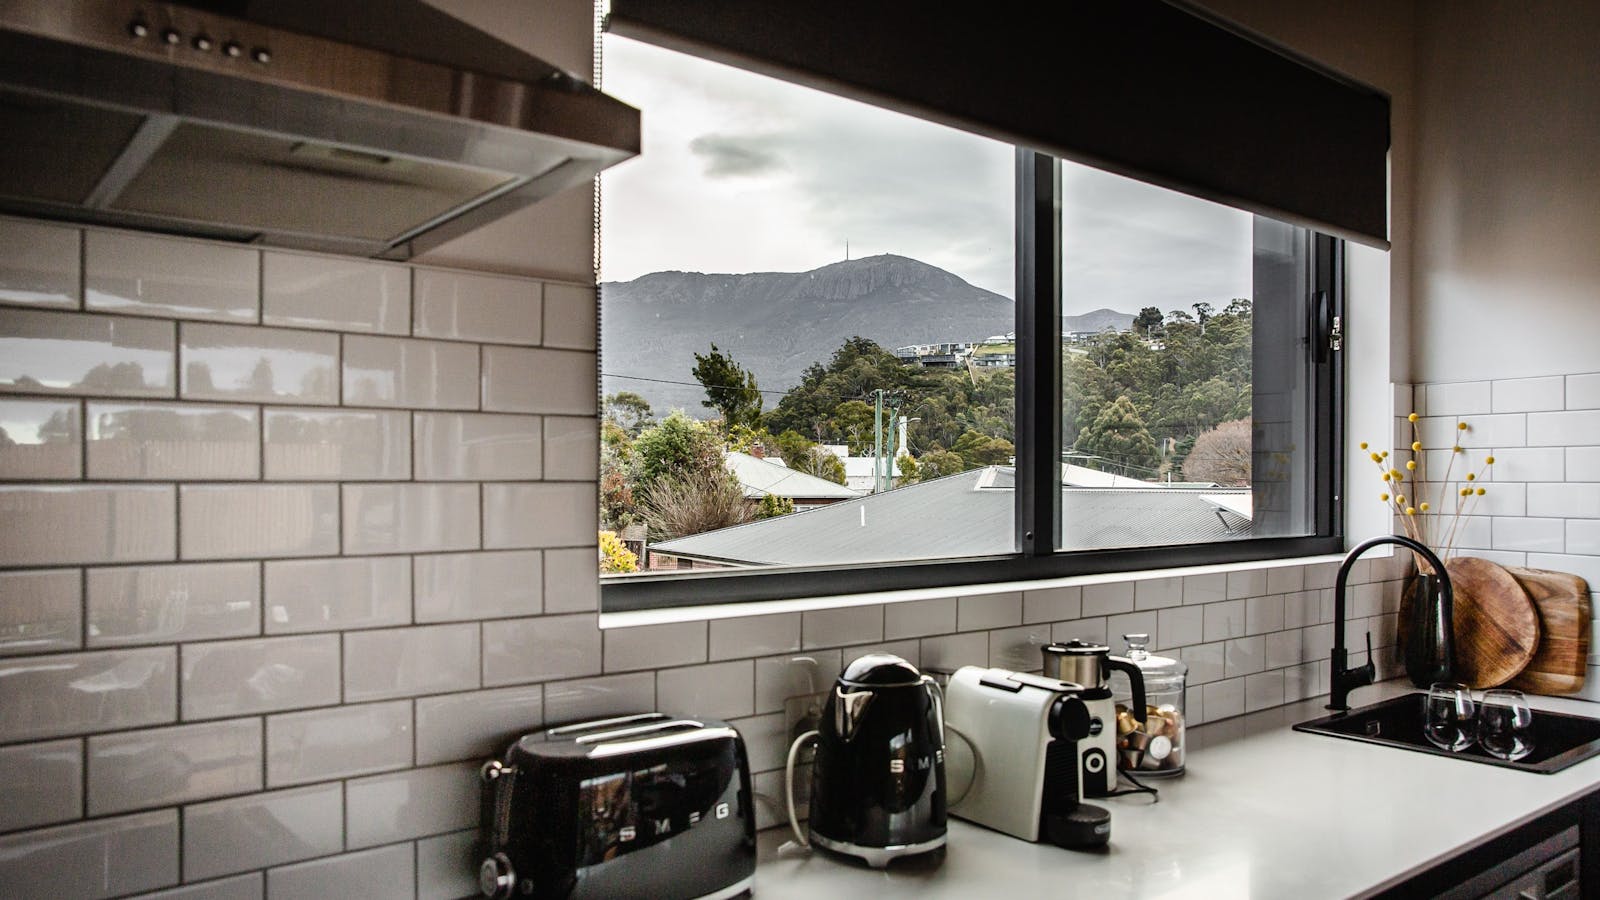 Kunanyi (Mt Wellington) from the kitchen window